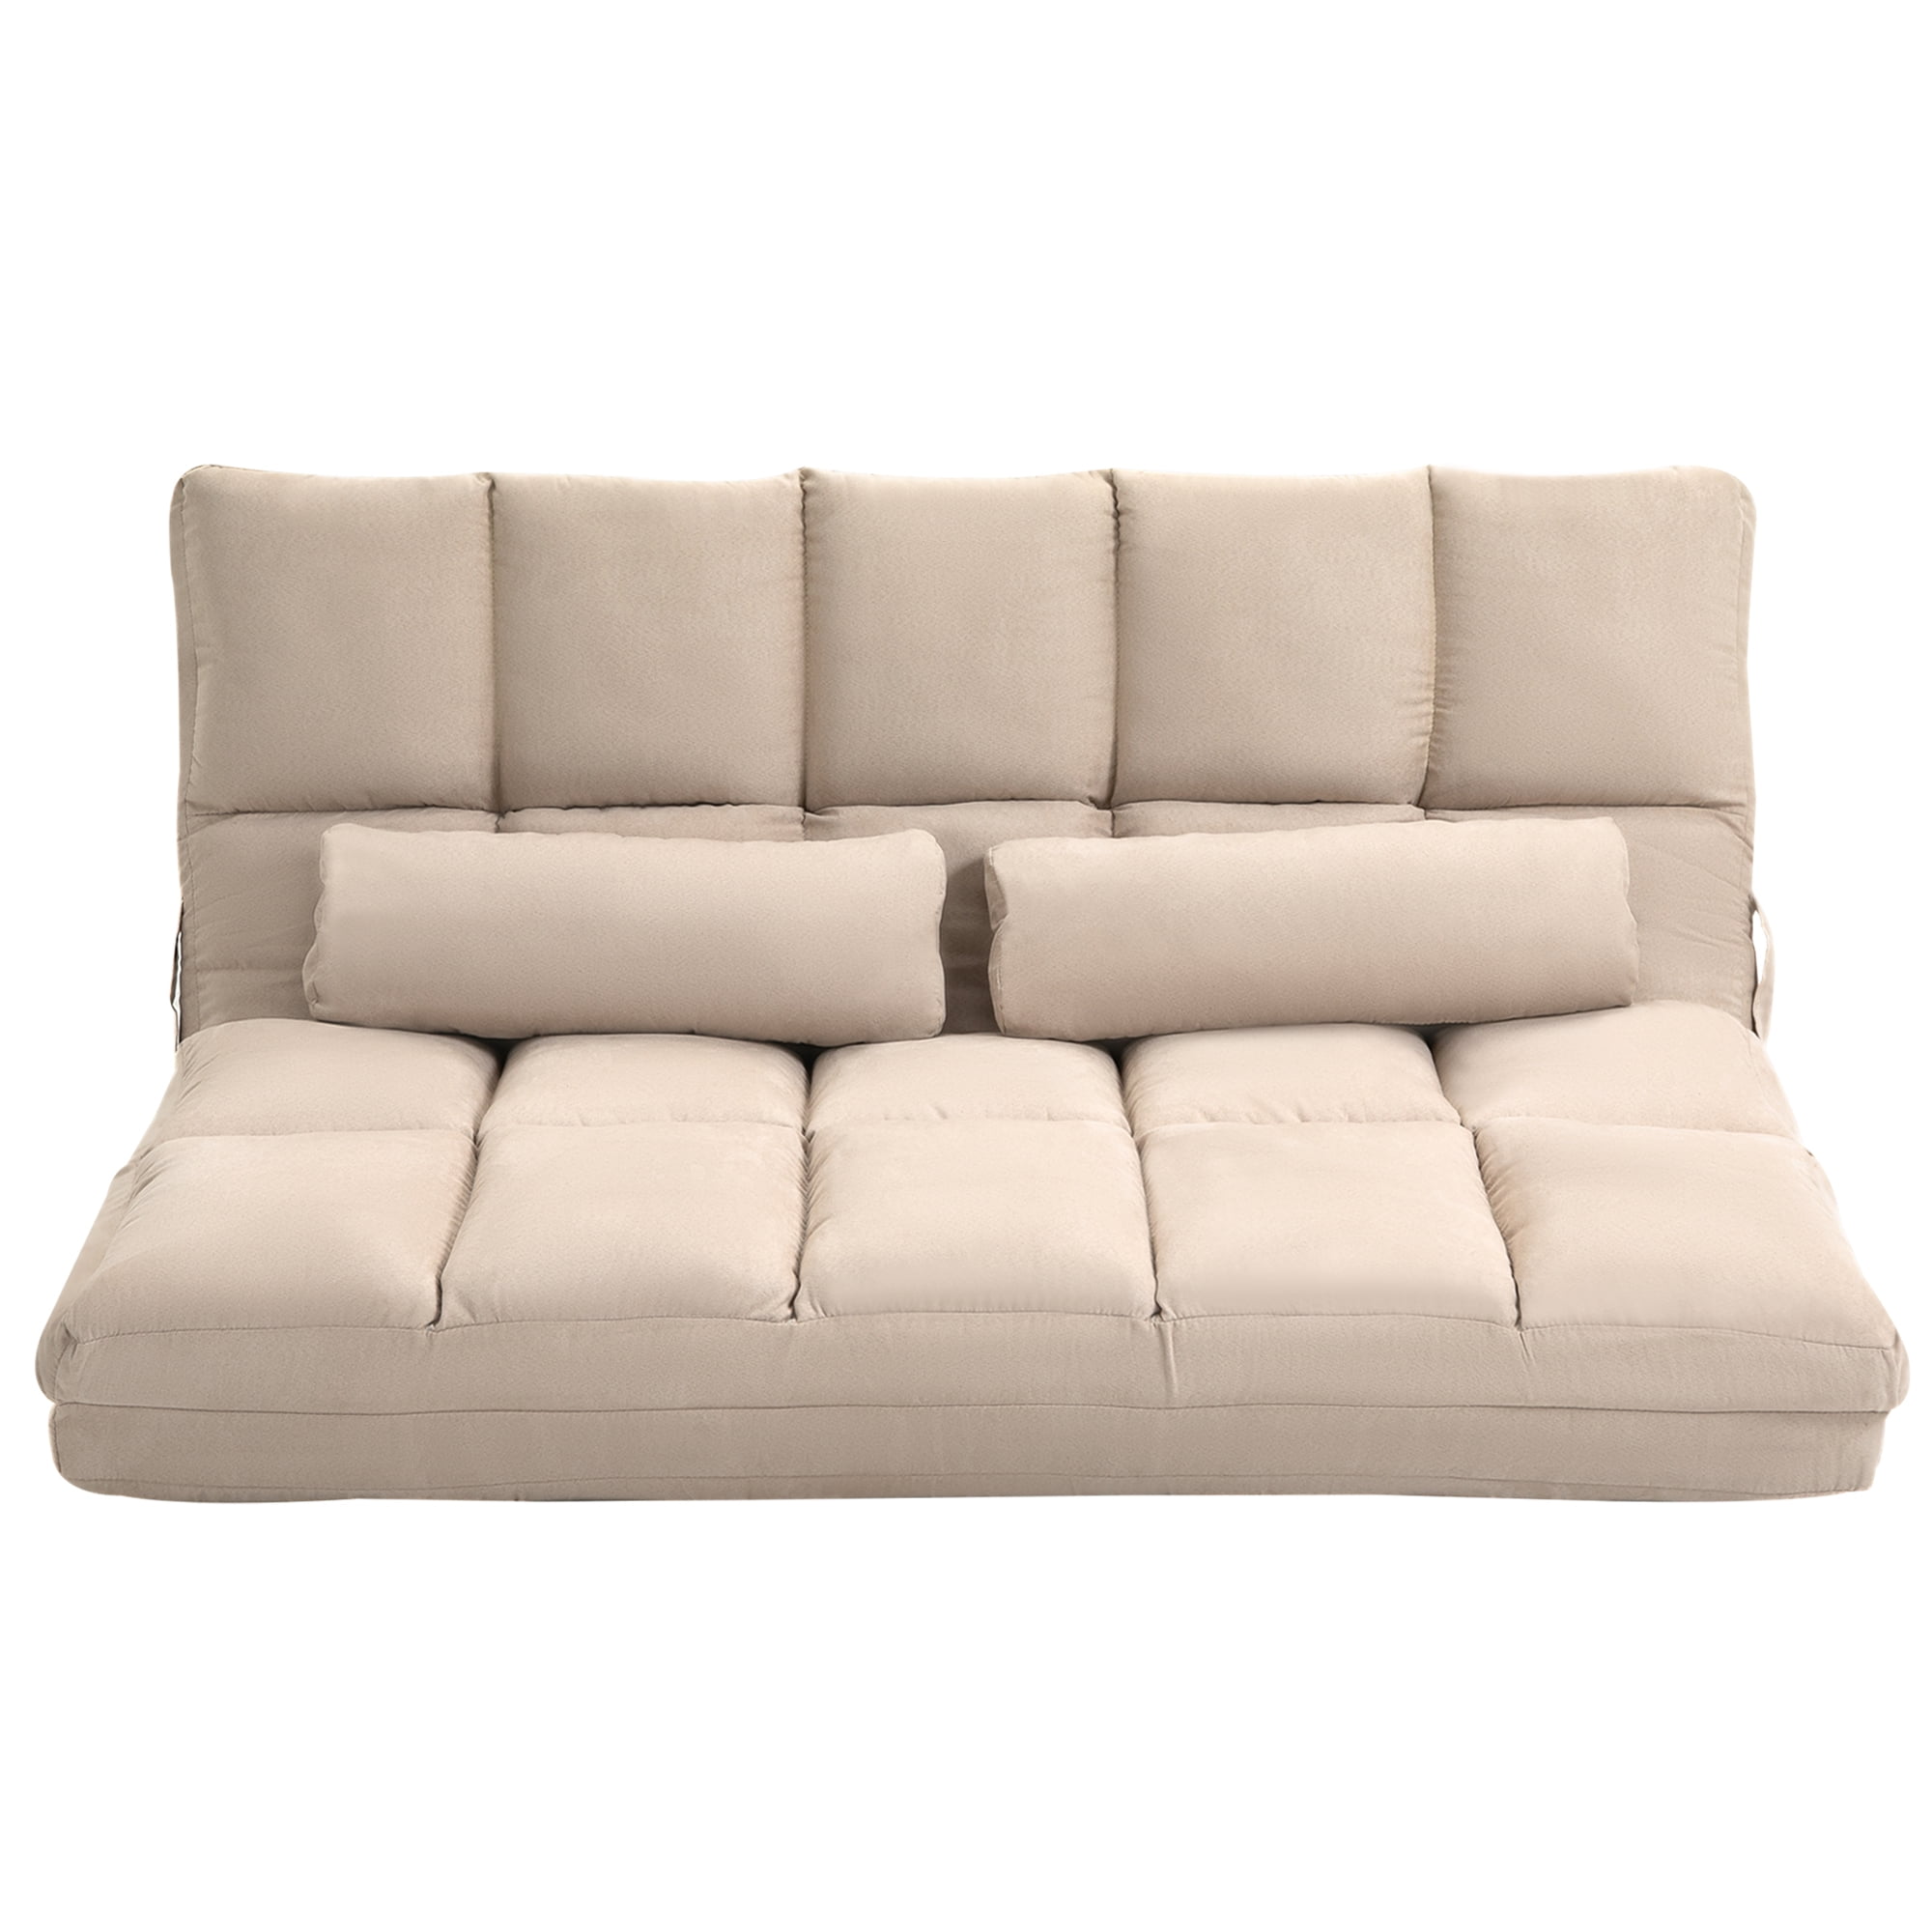 HOMCOM Convertible Floor Sofa with 7 Position Adjustable Positions, Beige